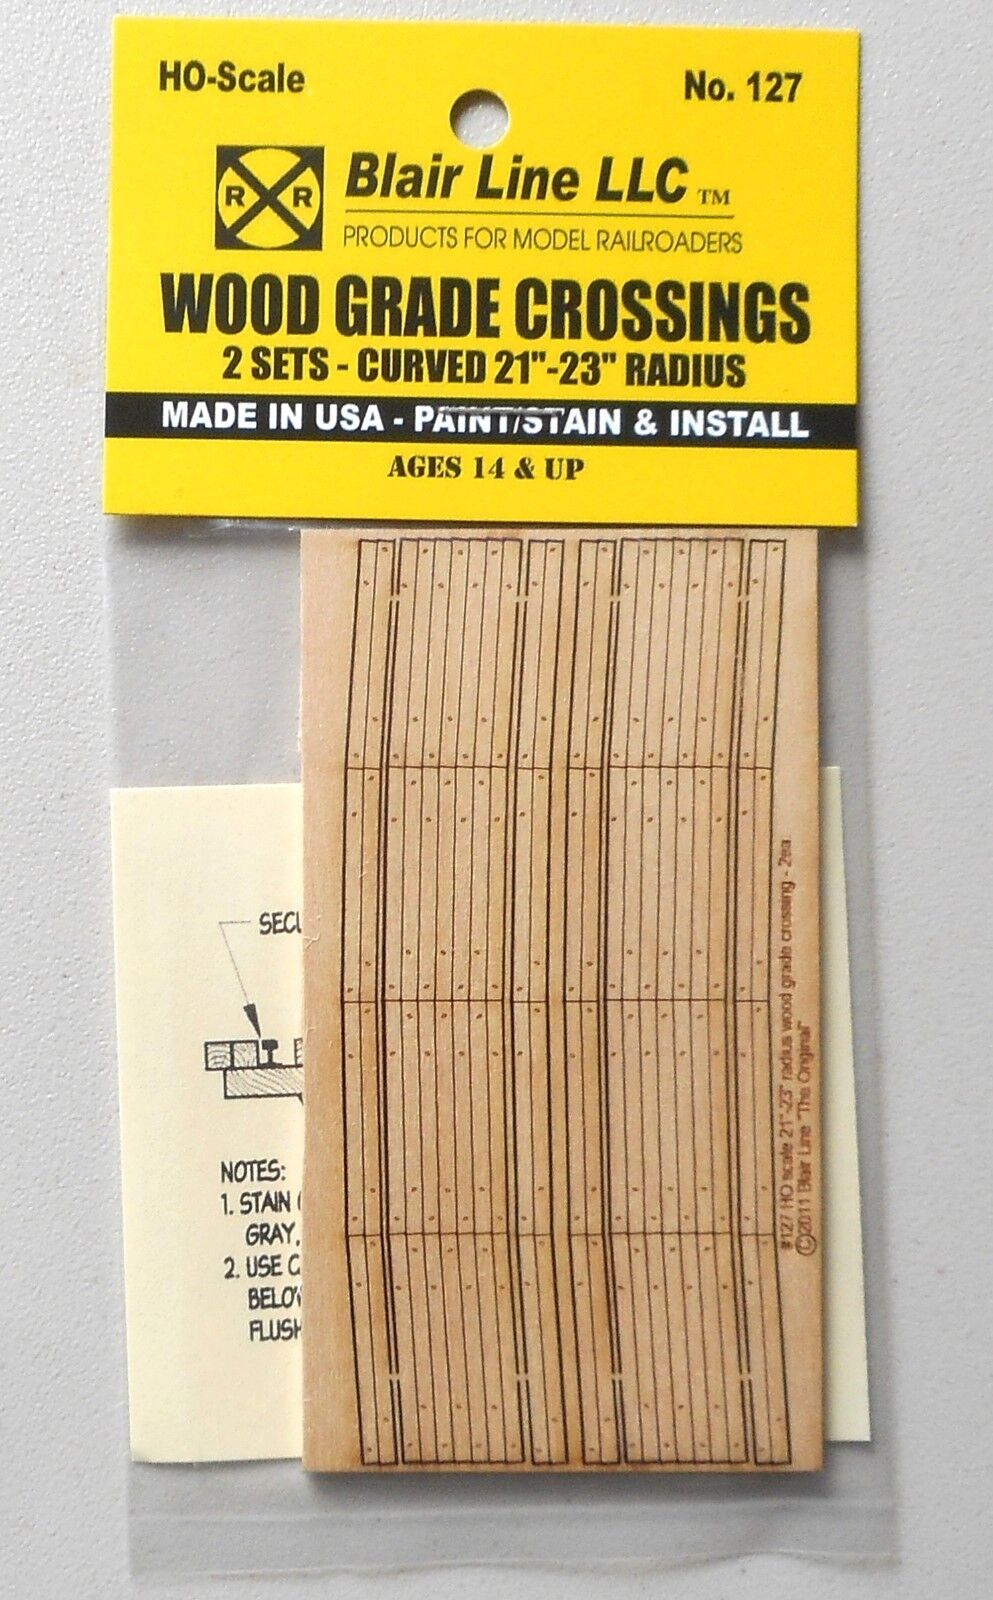 Wood Grade Crossings Curved 21-23 HO SCALE TRAIN LAYOUT DIORAMA BLAIR LINE 127